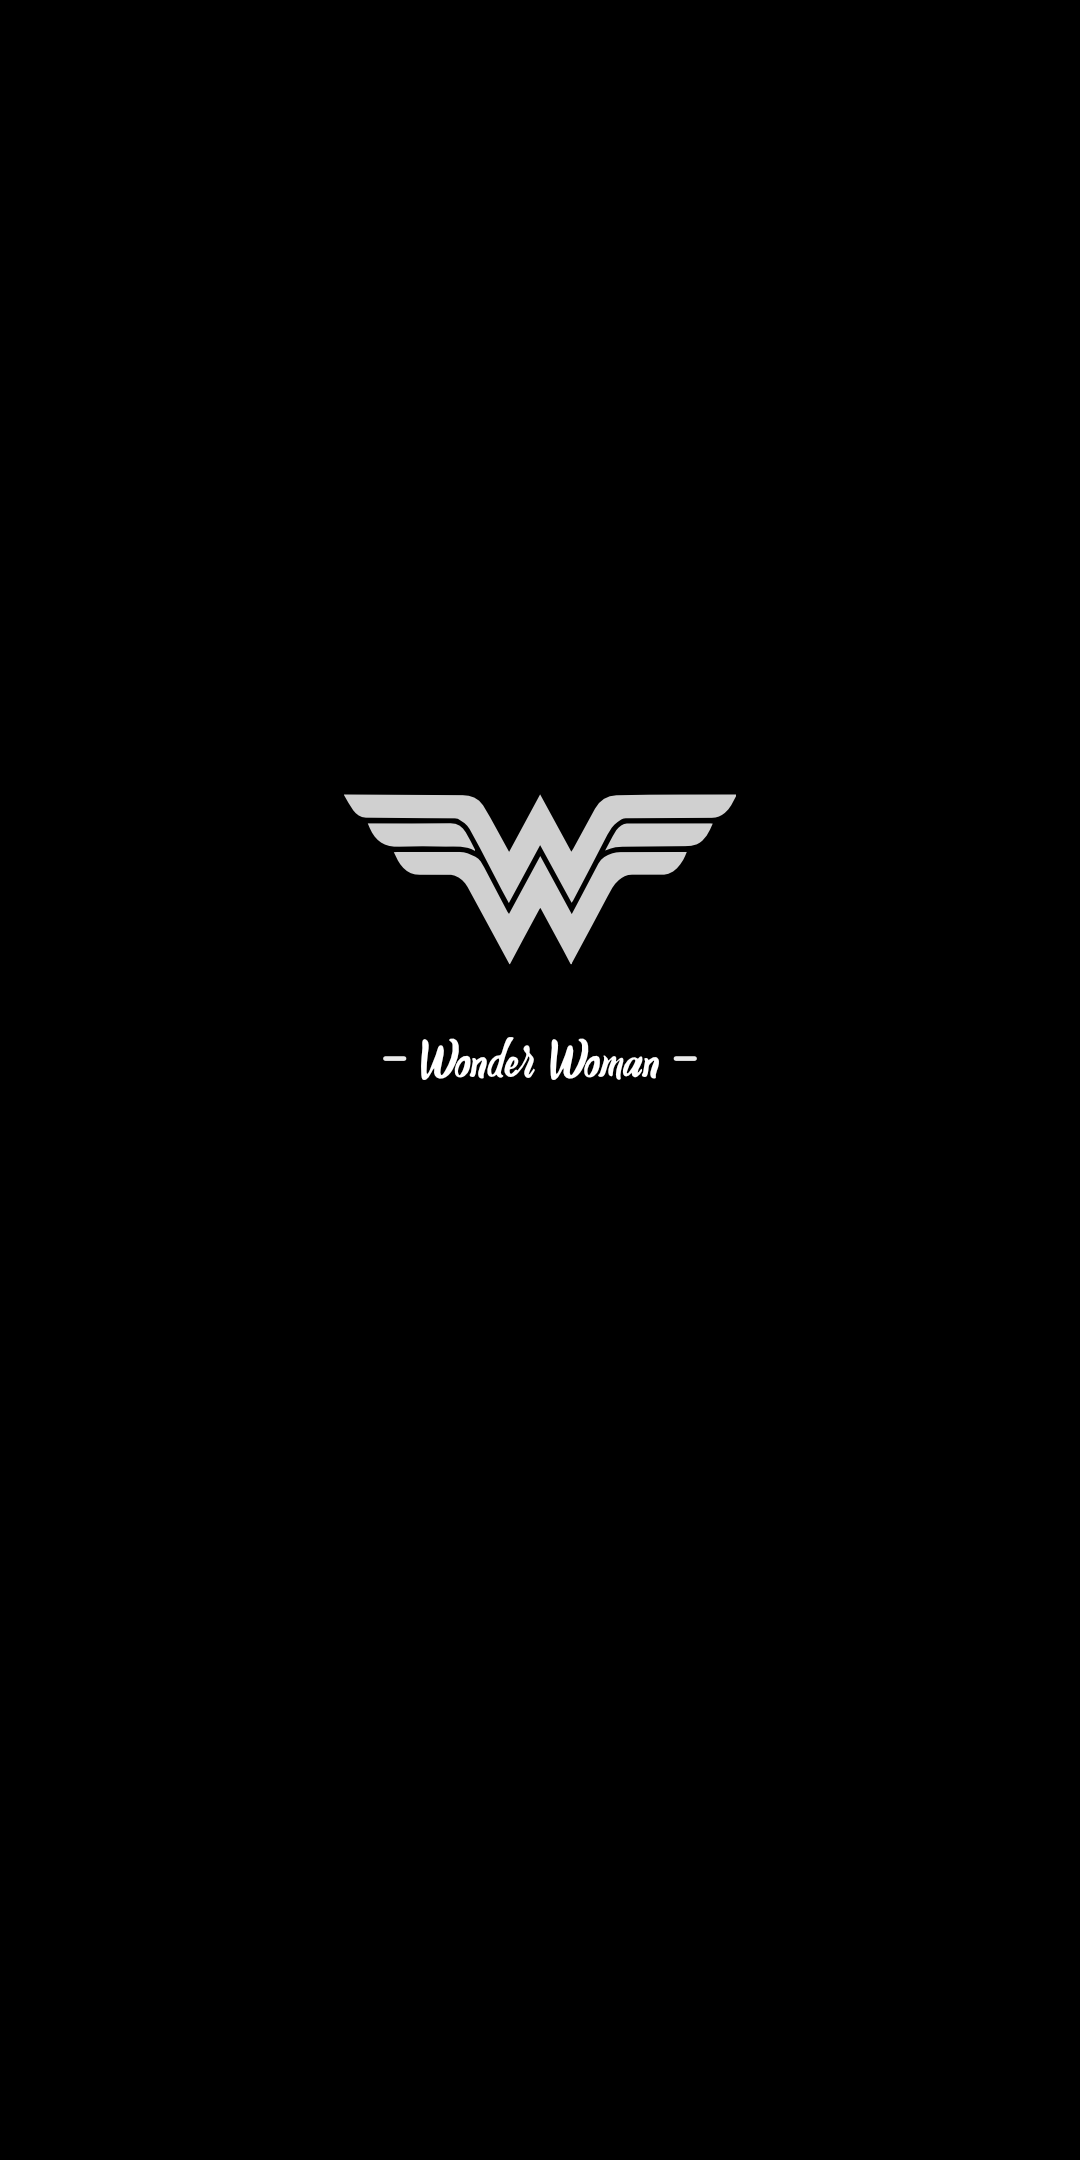 Logo Wonder Woman Wallpapers - Wallpaper Cave